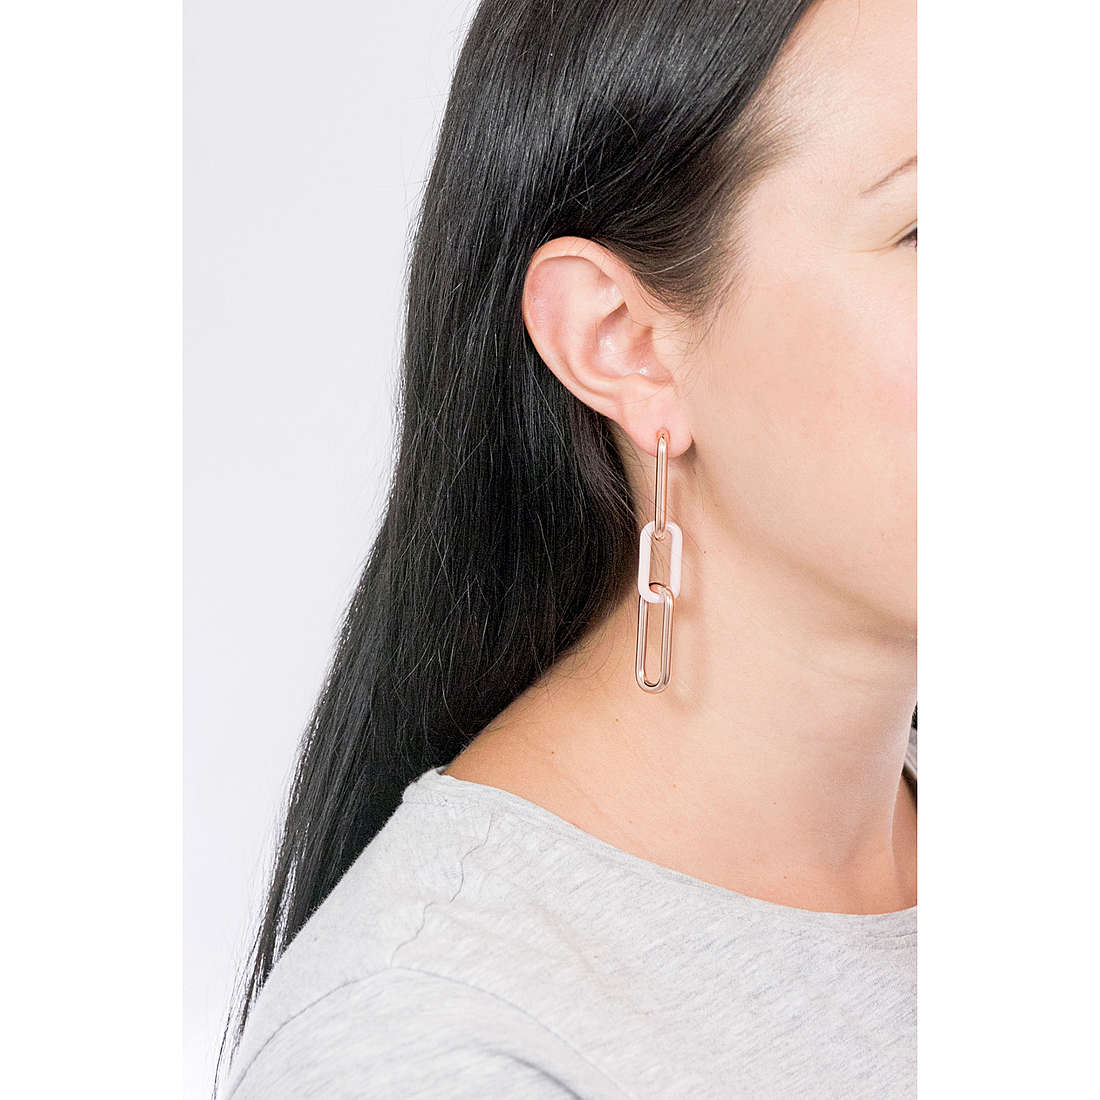 Emporio Armani earrings woman EGS2698221 wearing